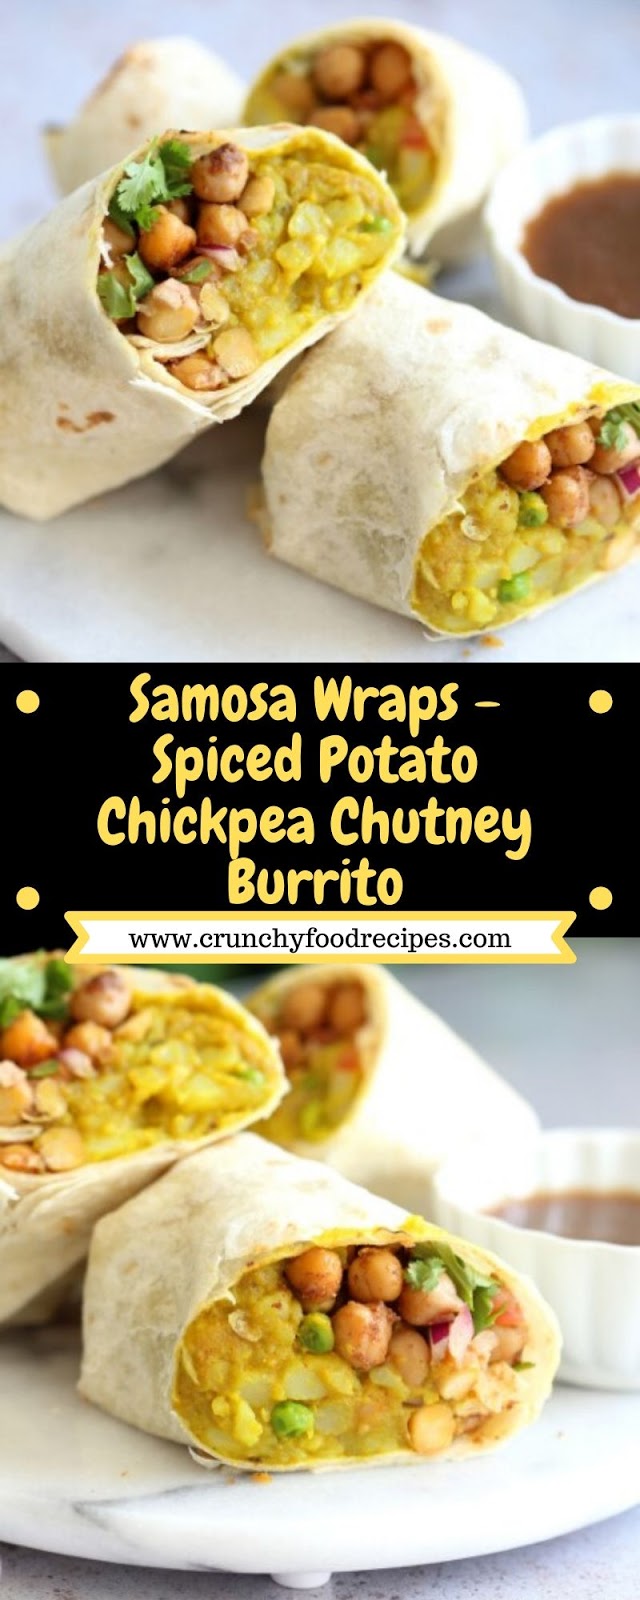 Samosa Wraps - Spiced Potato Chickpea Chutney Burrito